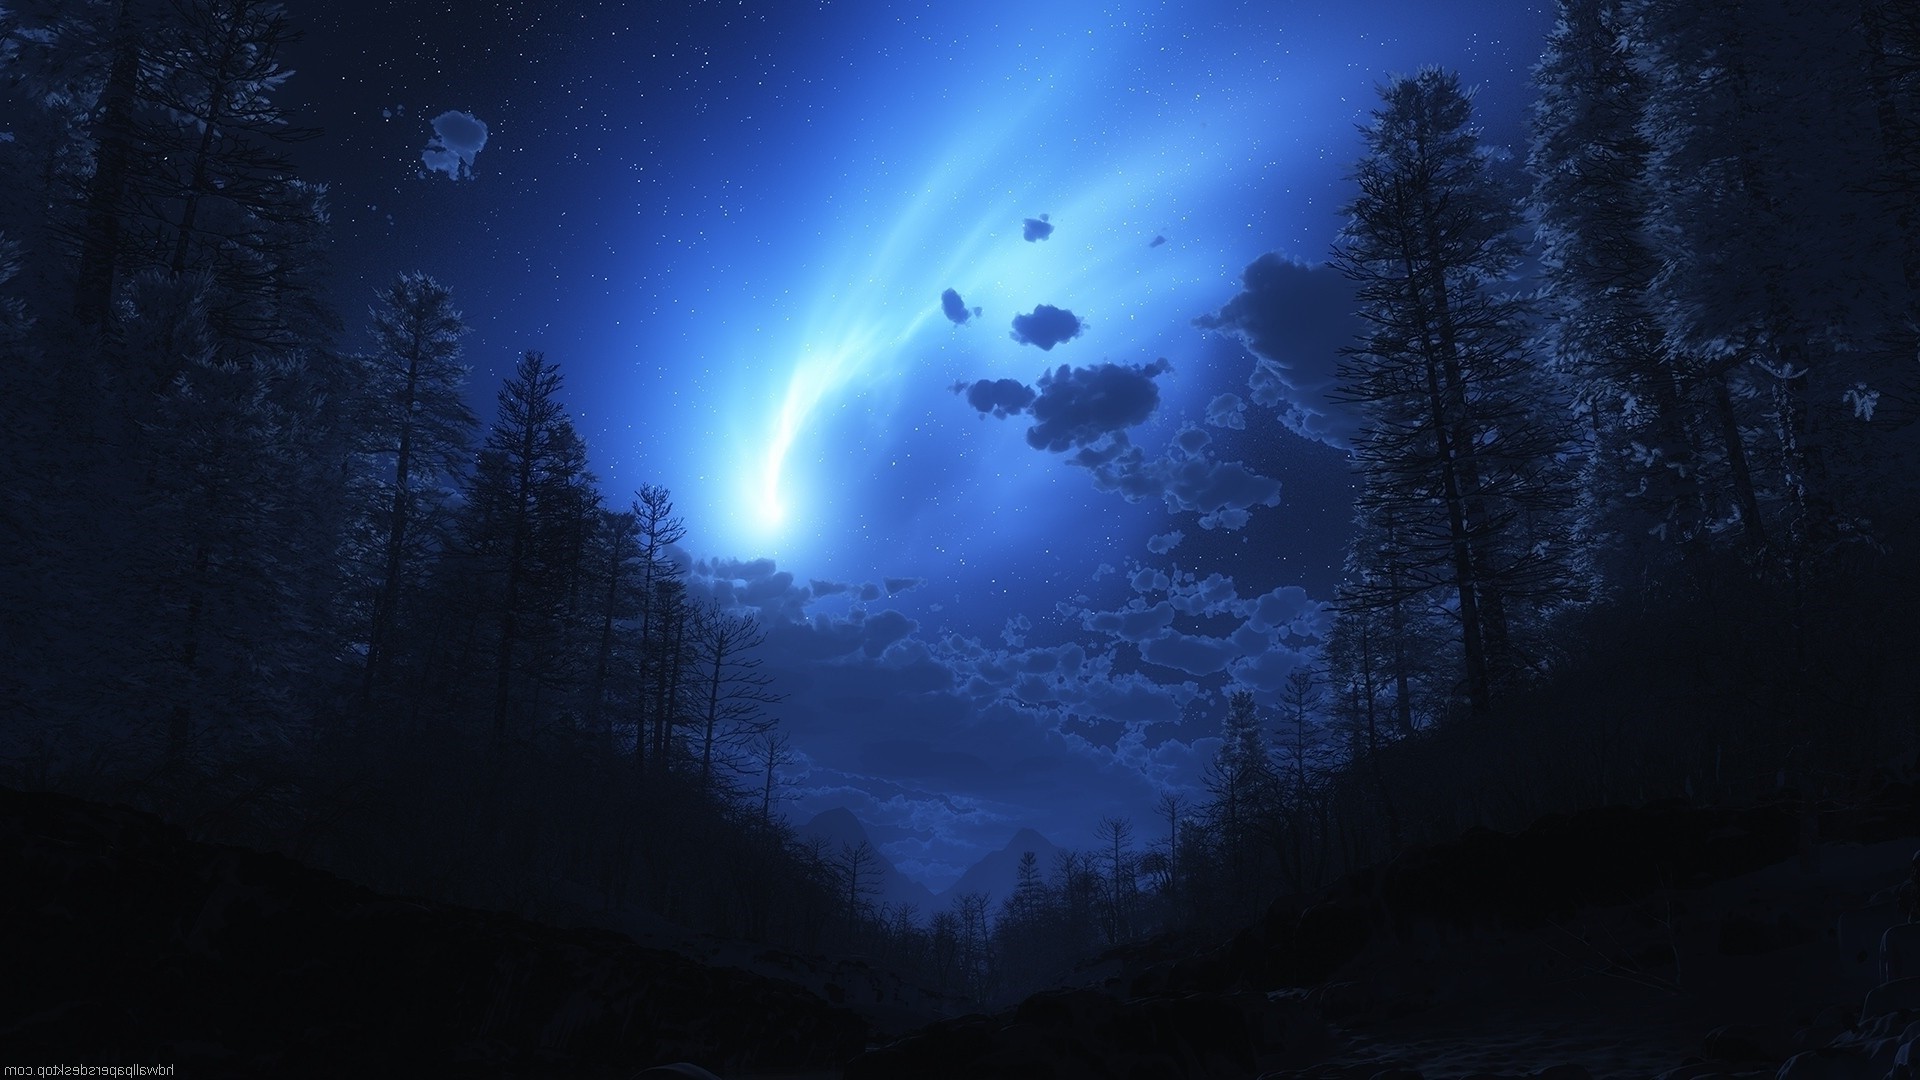 1920x1080 landscape anime digital art forest trees stars starry night night sky wallpaper JPG 353 kB